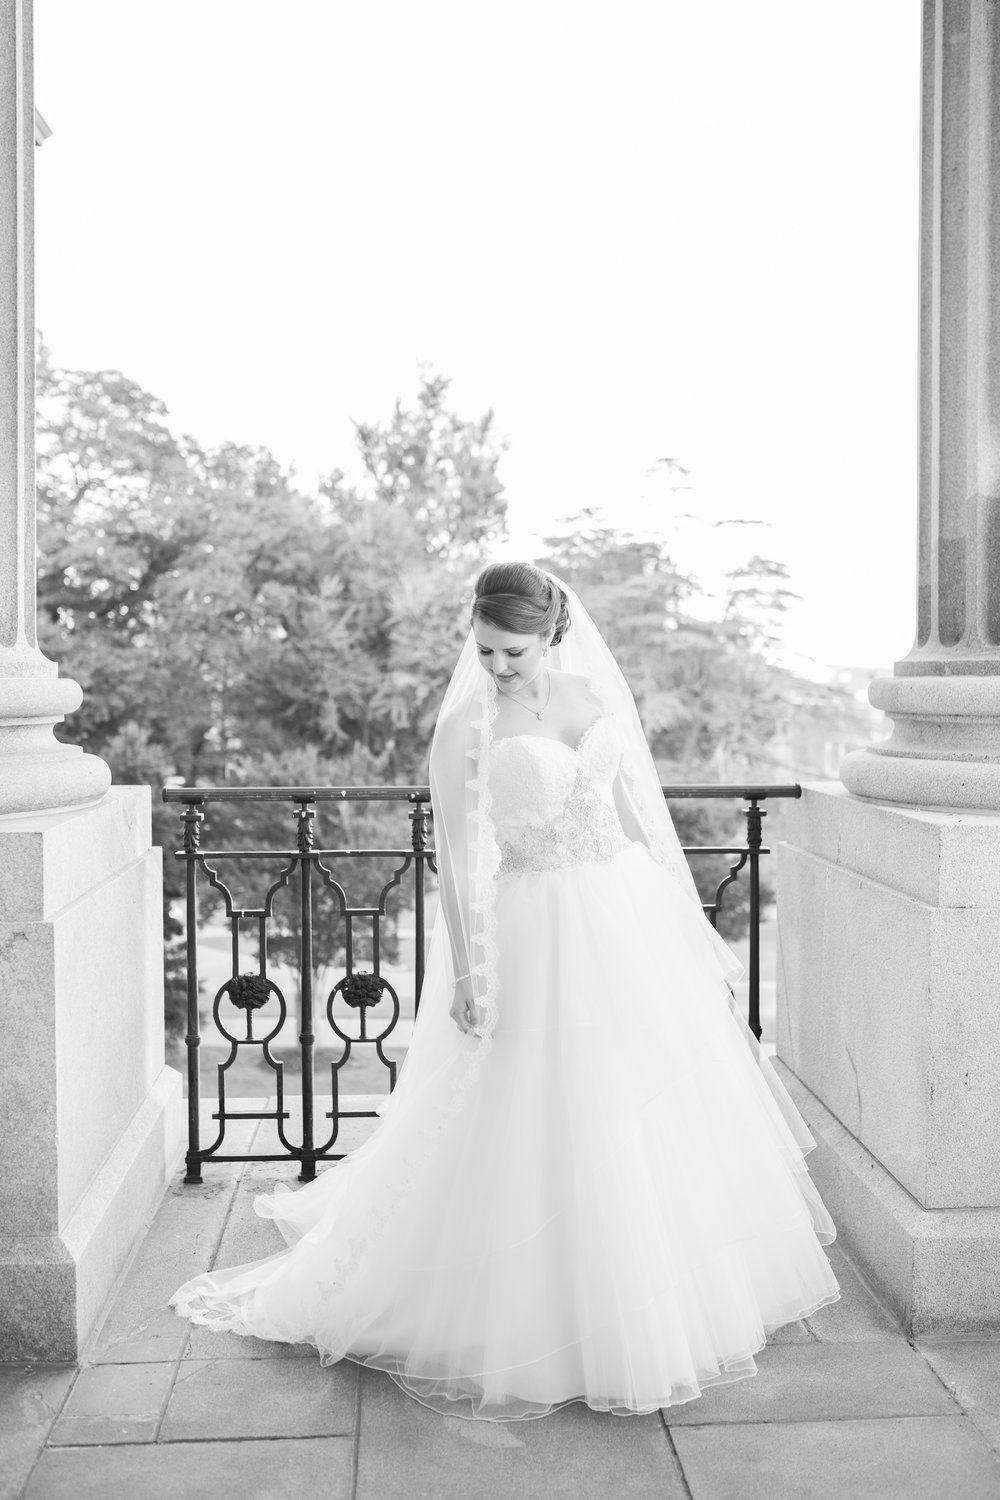 Black and White photo of Bride